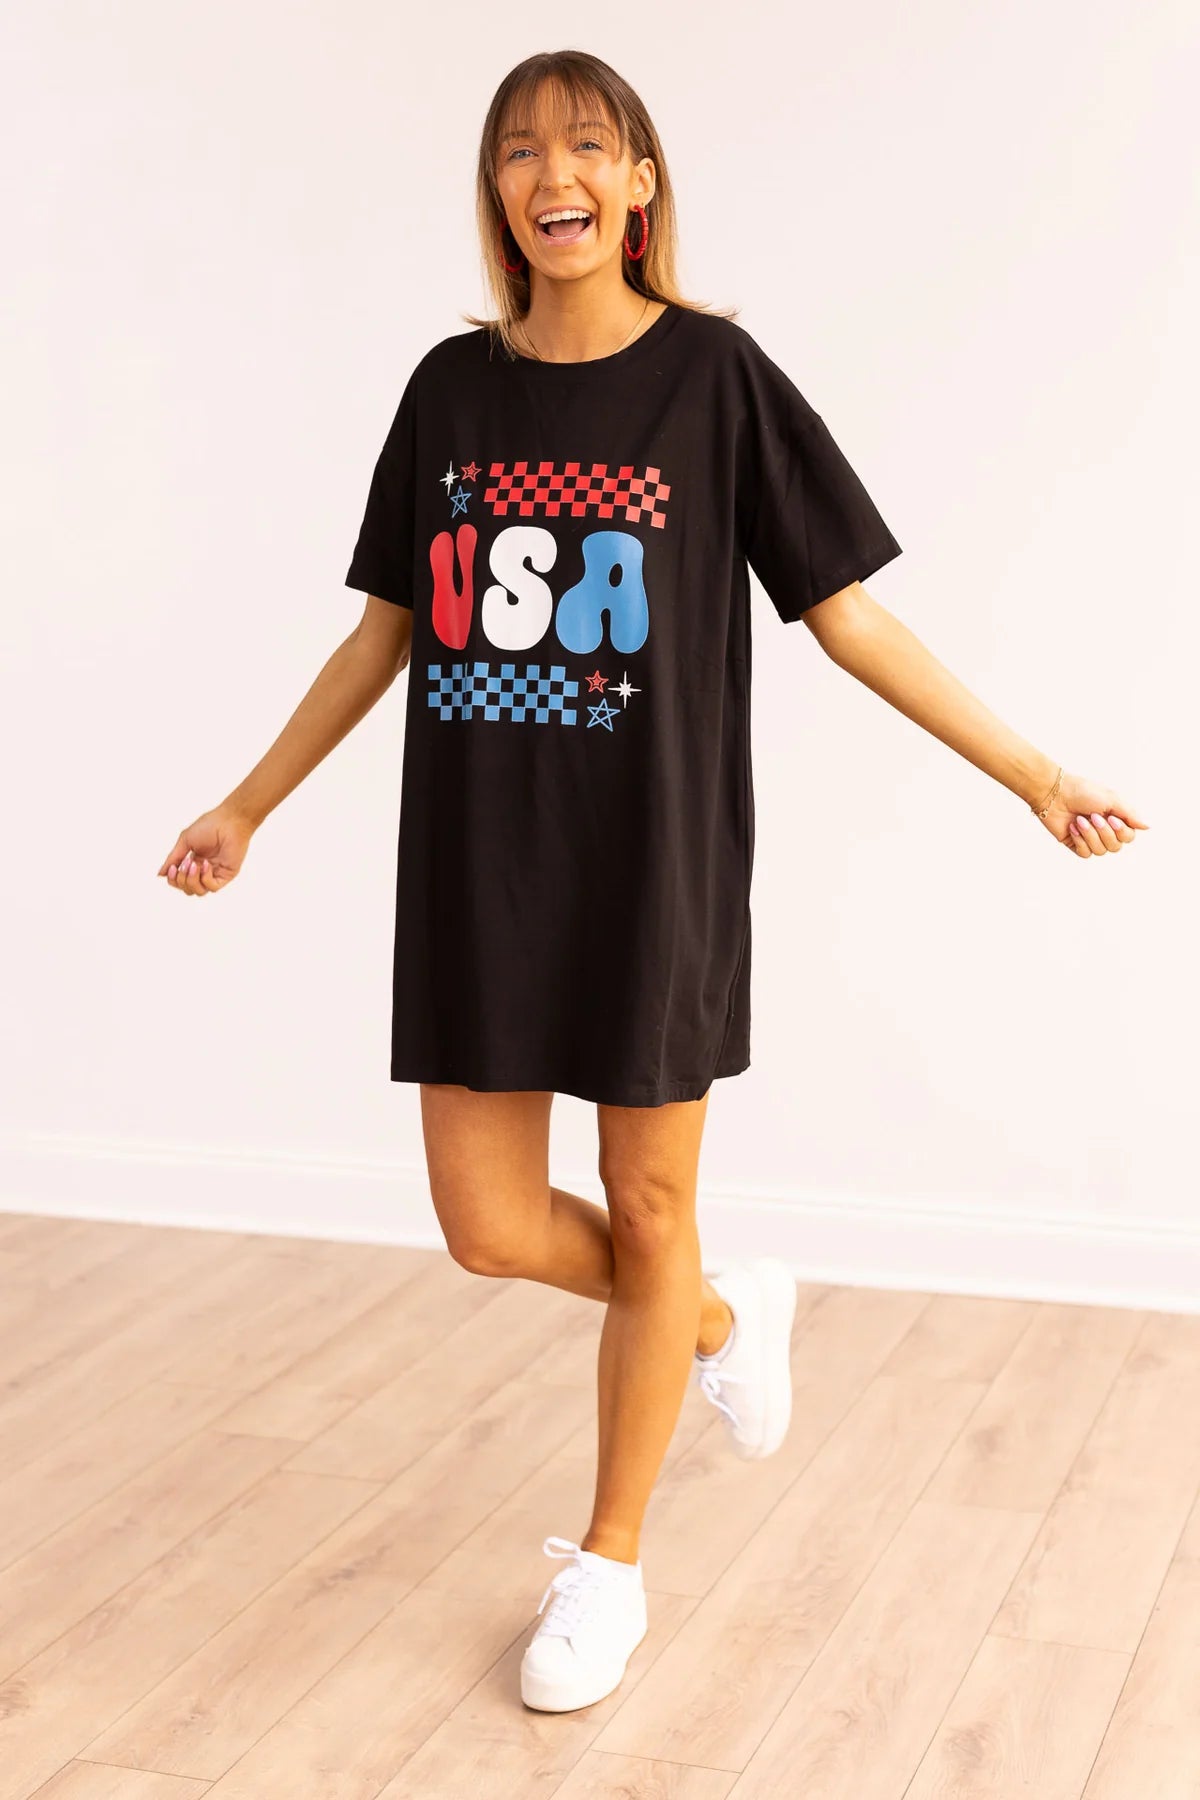 The USA Dress